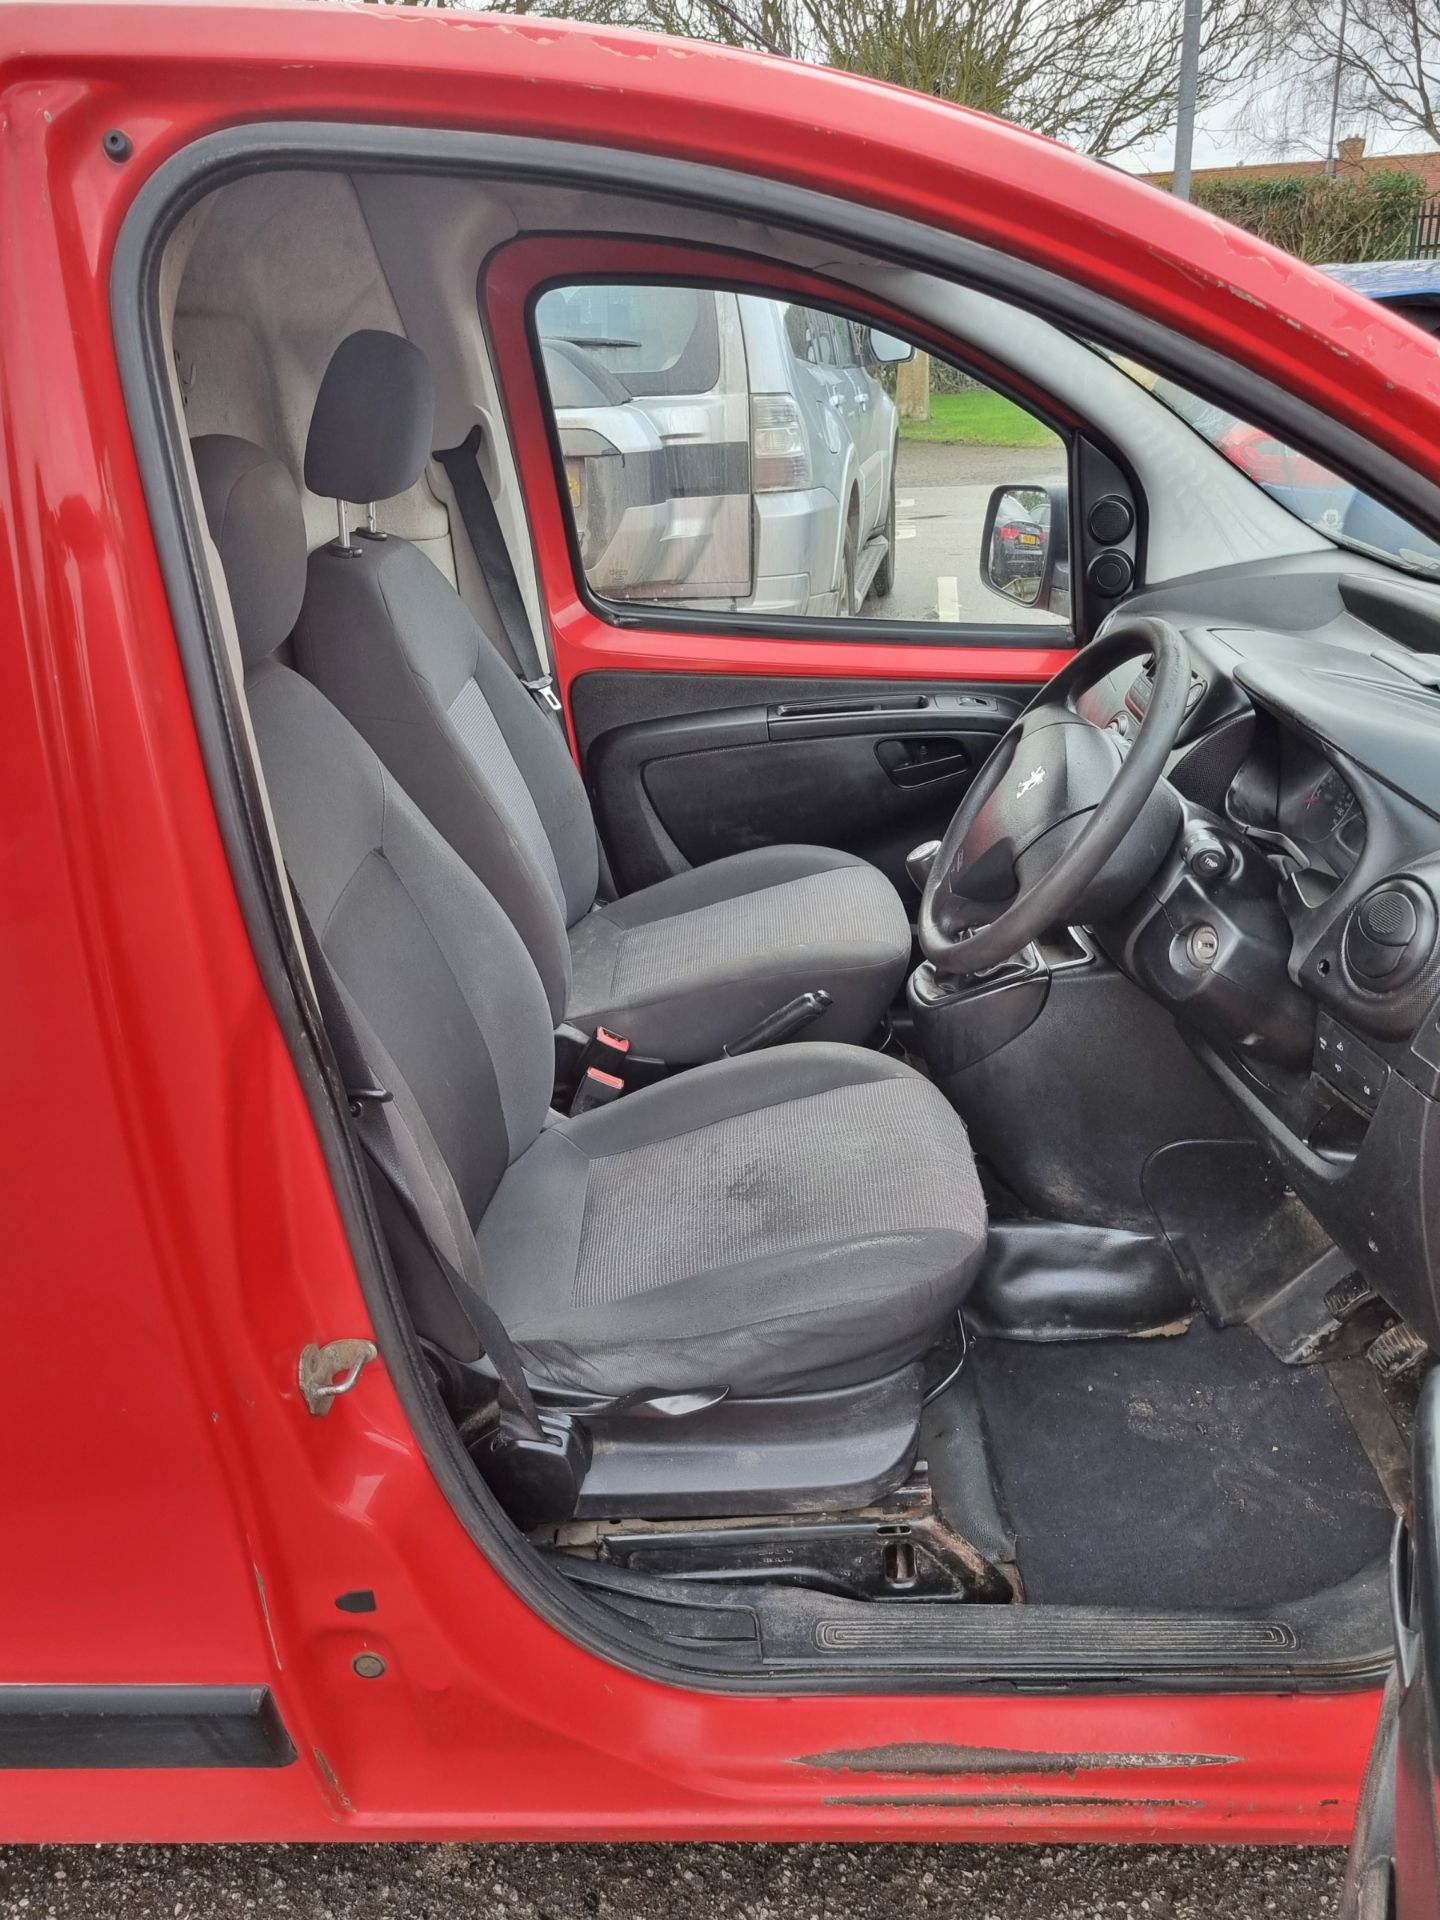 Peugeot Bipper S HDI 1.4L panel van - 81,716 miles - red - 2 seats - LGV for tax - 2011 plate - Bild 8 aus 34